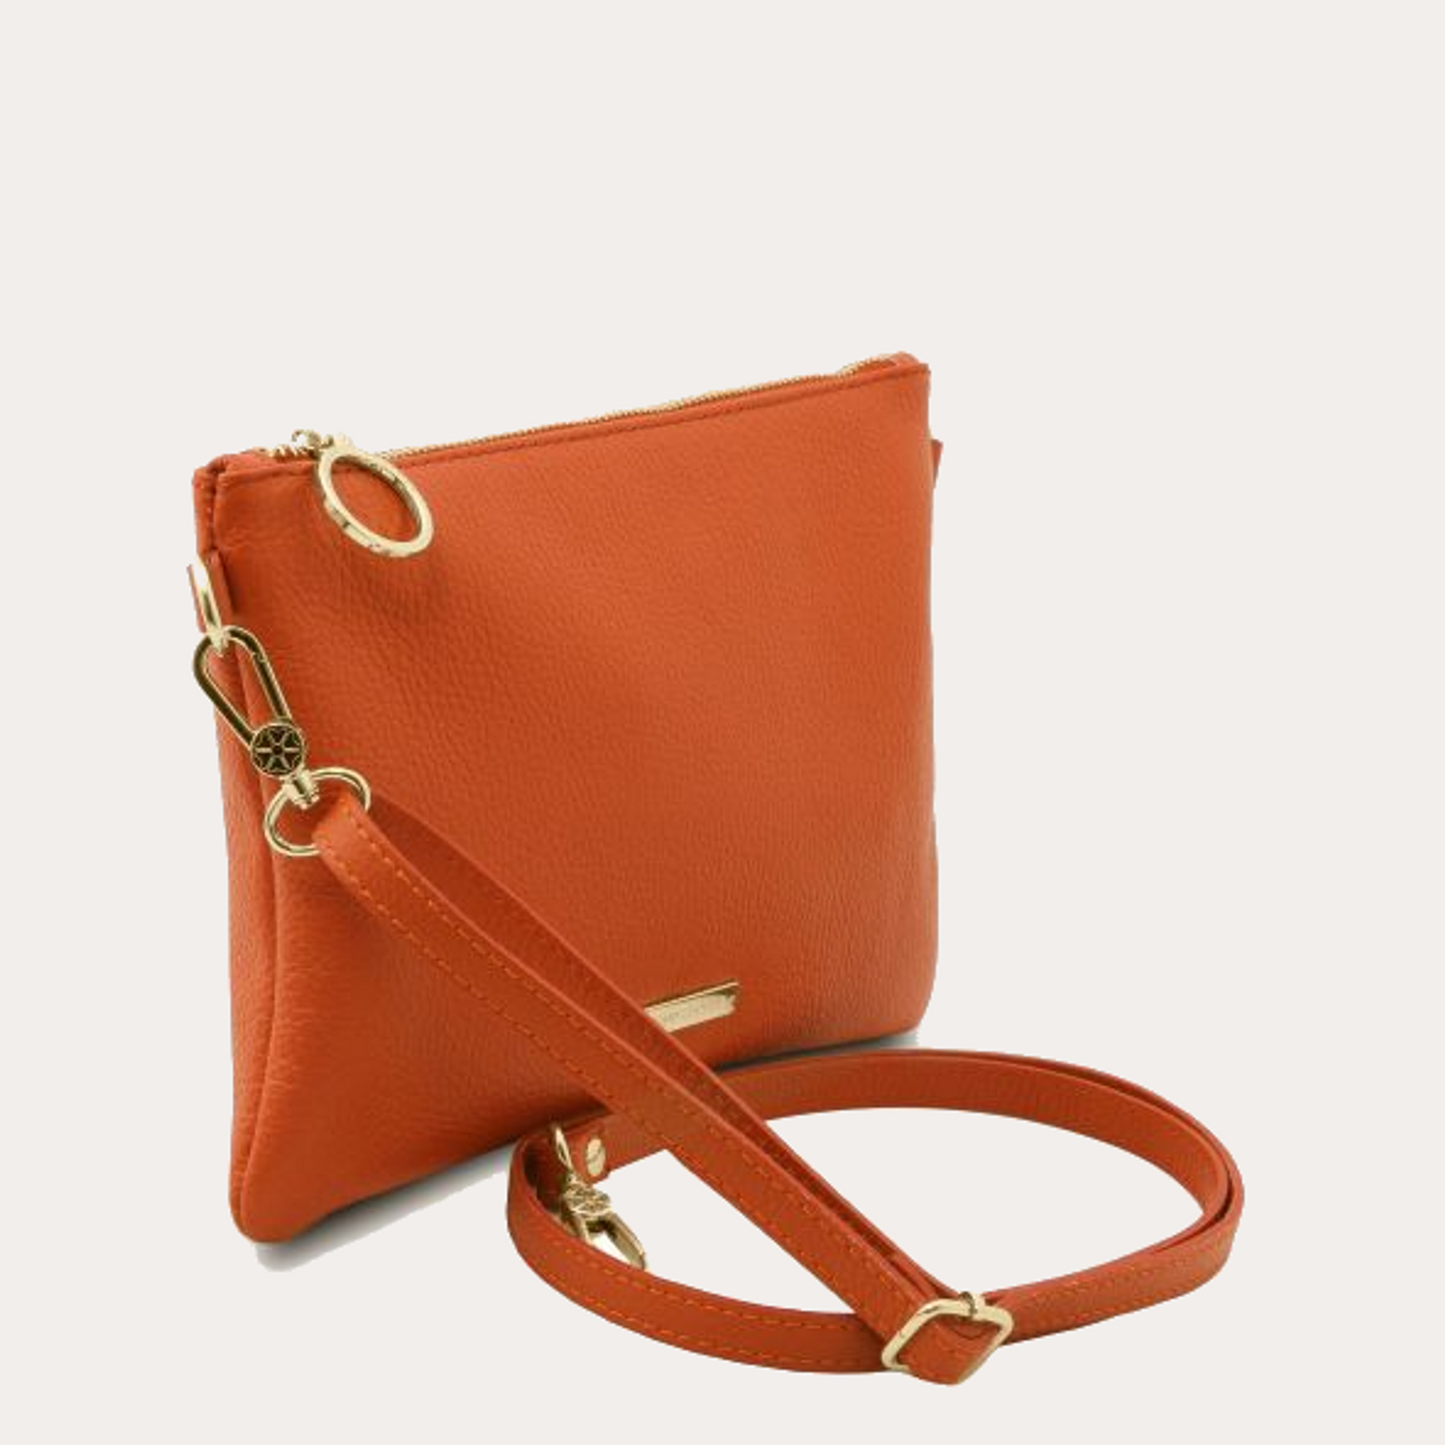 Tuscany Leather Soft Orange Leather Clutch/Crossbody Bag